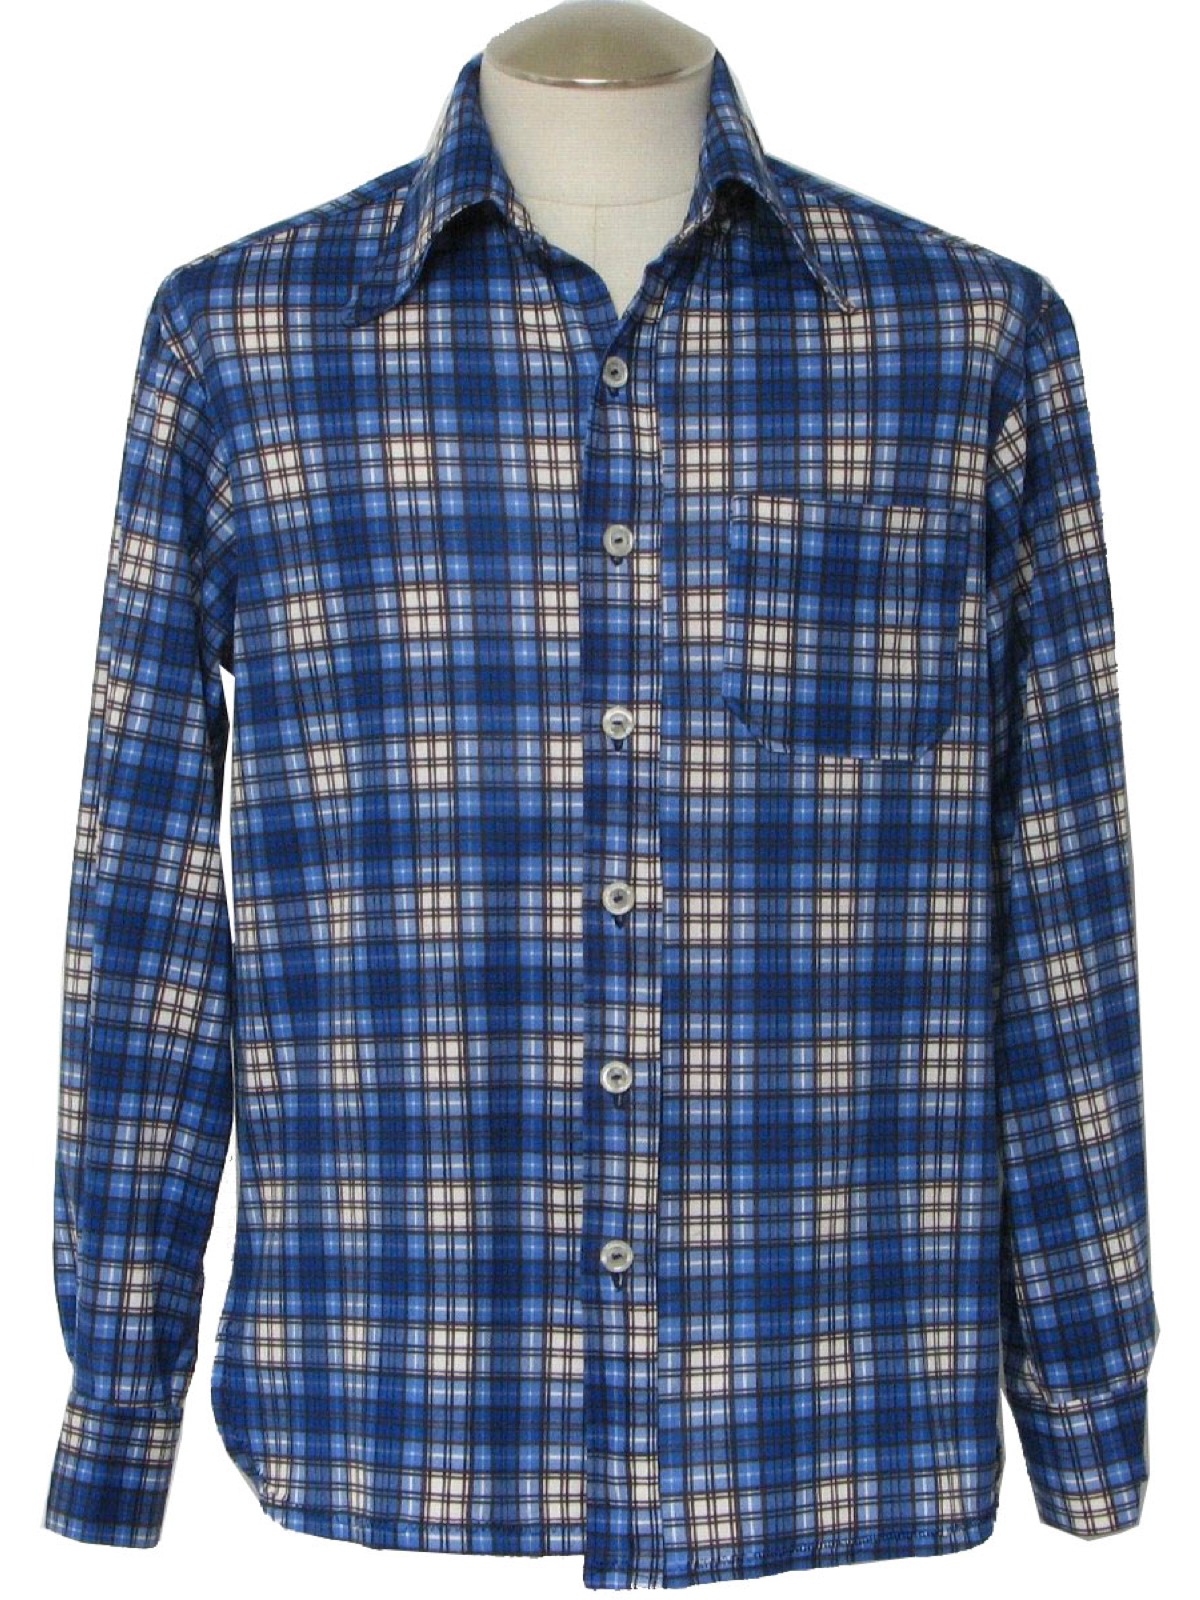 70s Shirt (Home Sewn): 70s -Home Sewn- Mens blue, black and white ...